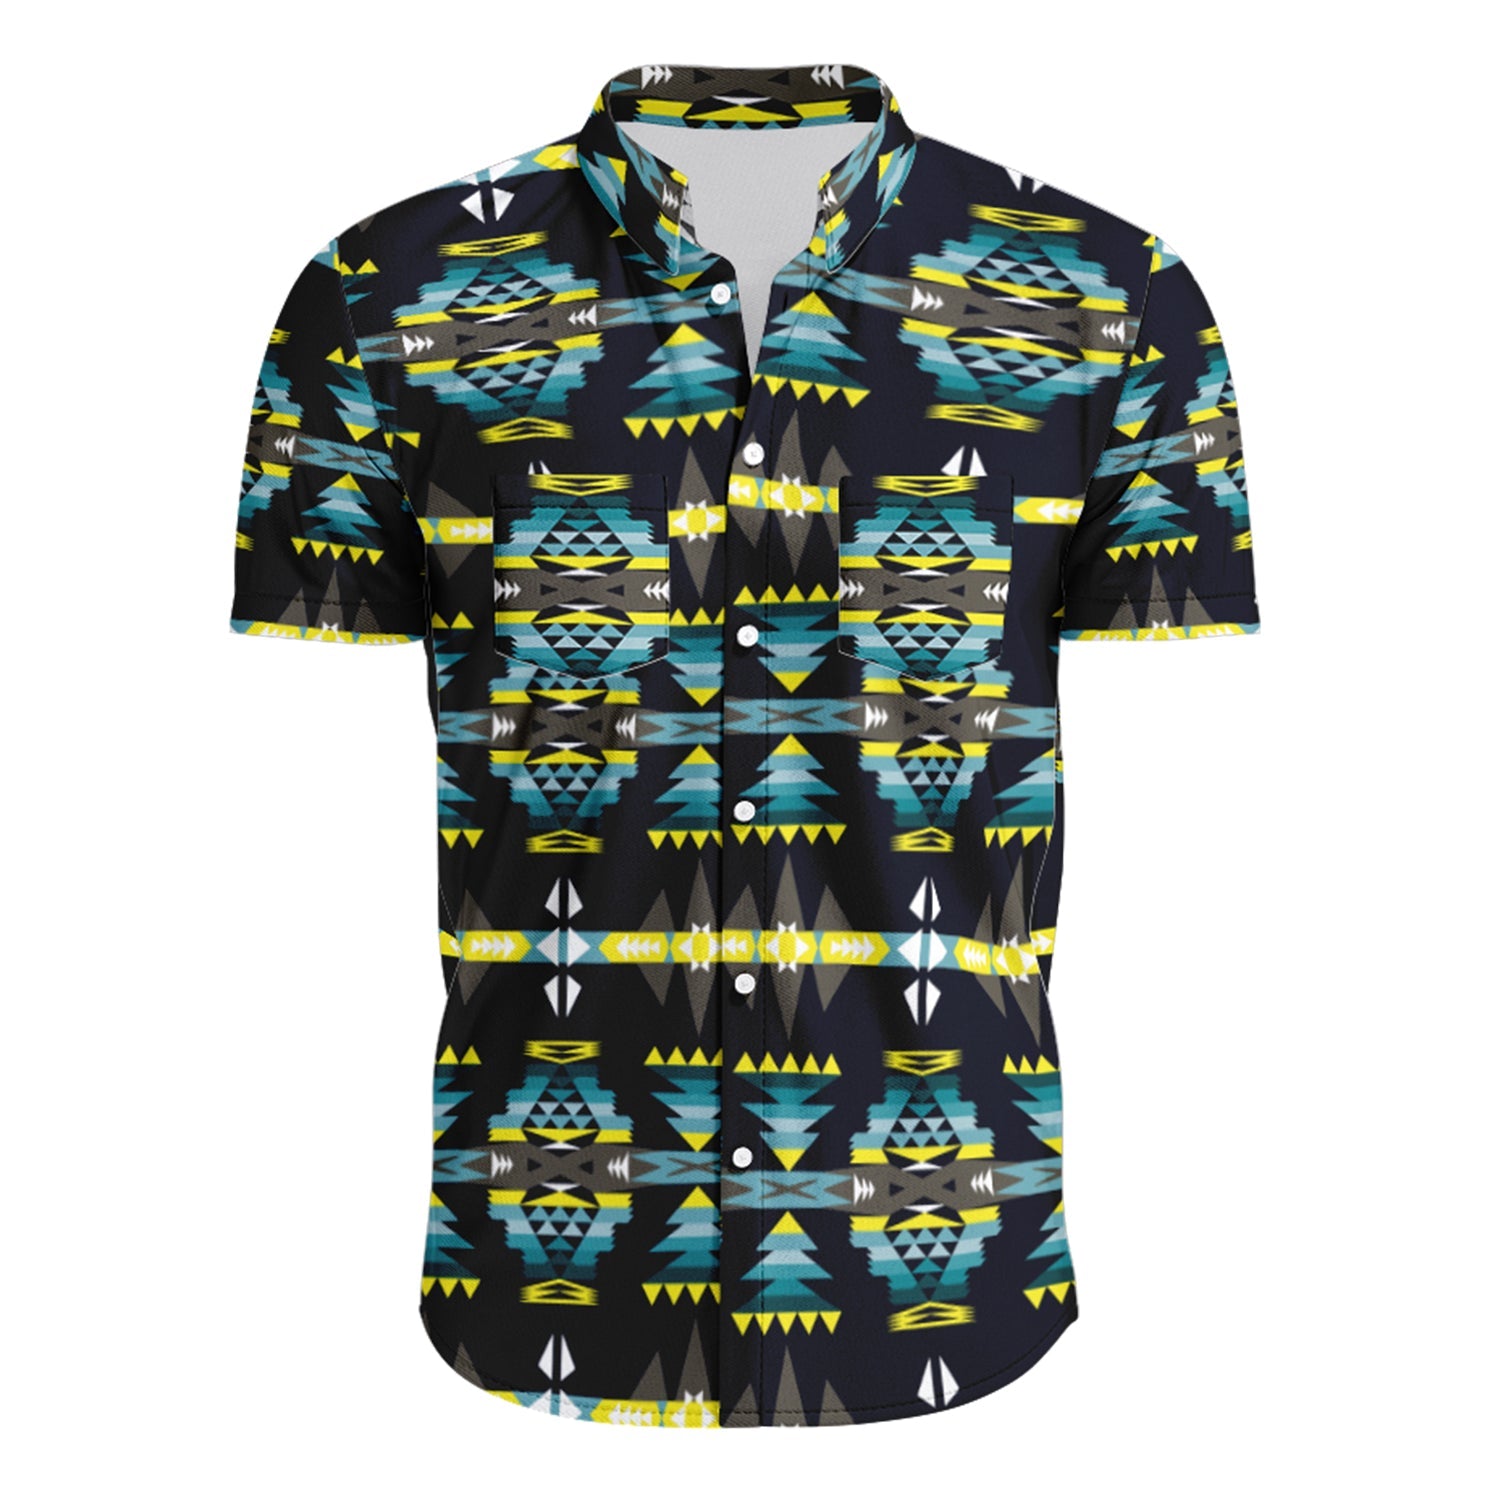 Men's Hawaiian-Style Button Up Shirt - River Trail